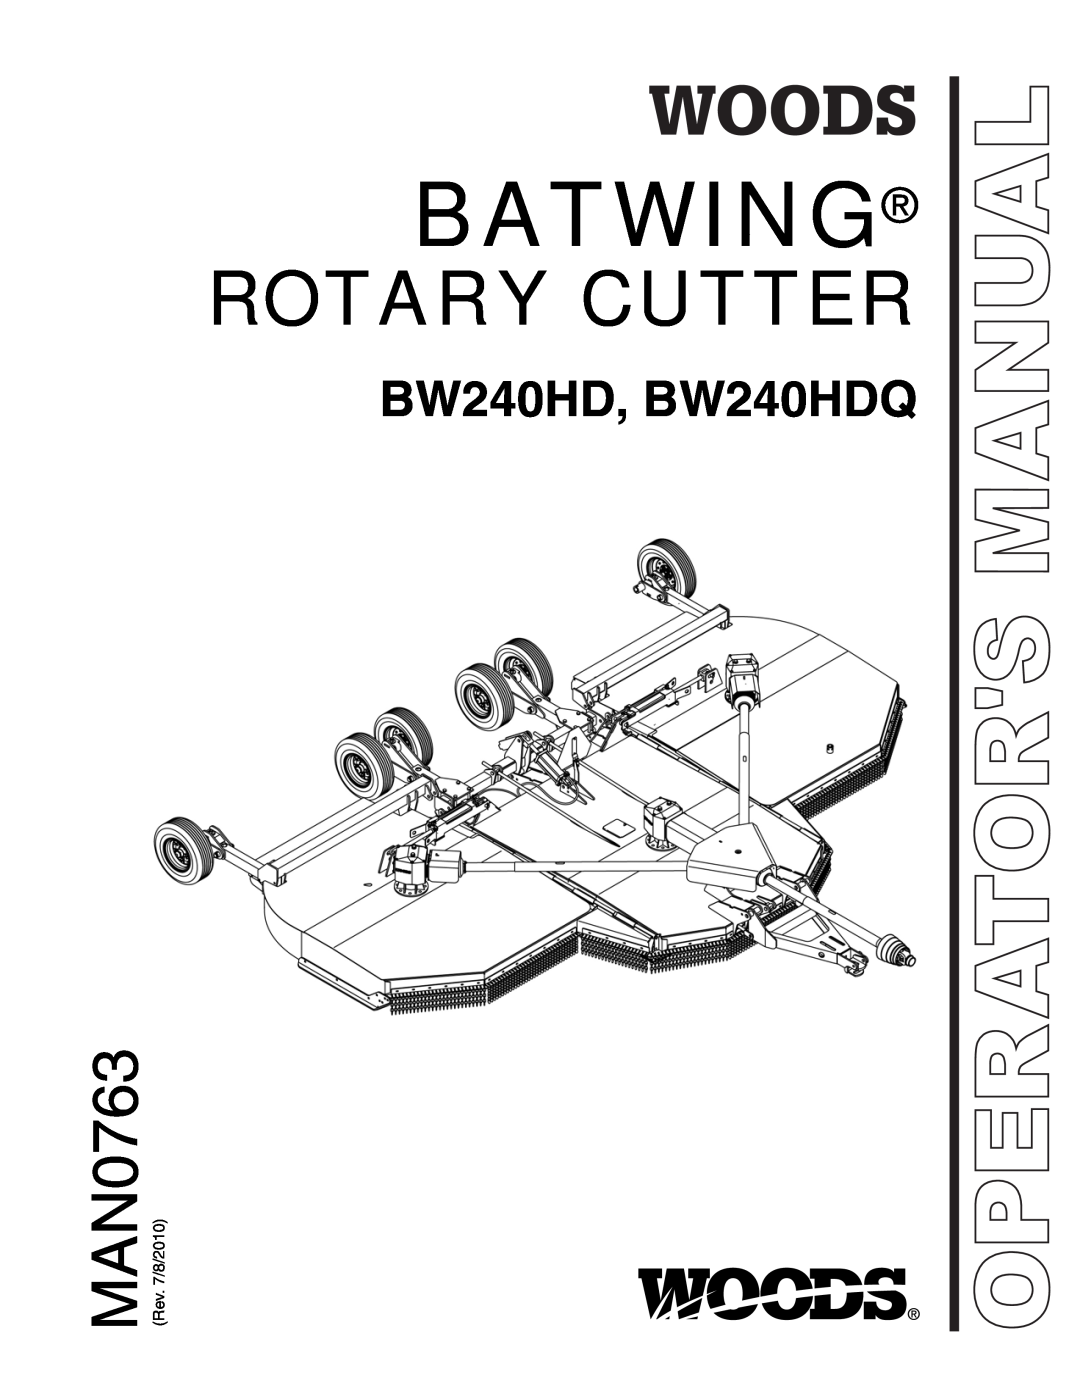 Woods Equipment manual Batwing, Rotary Cutter, MAN0763, BW240HD, BW240HDQ, Operators Manual 